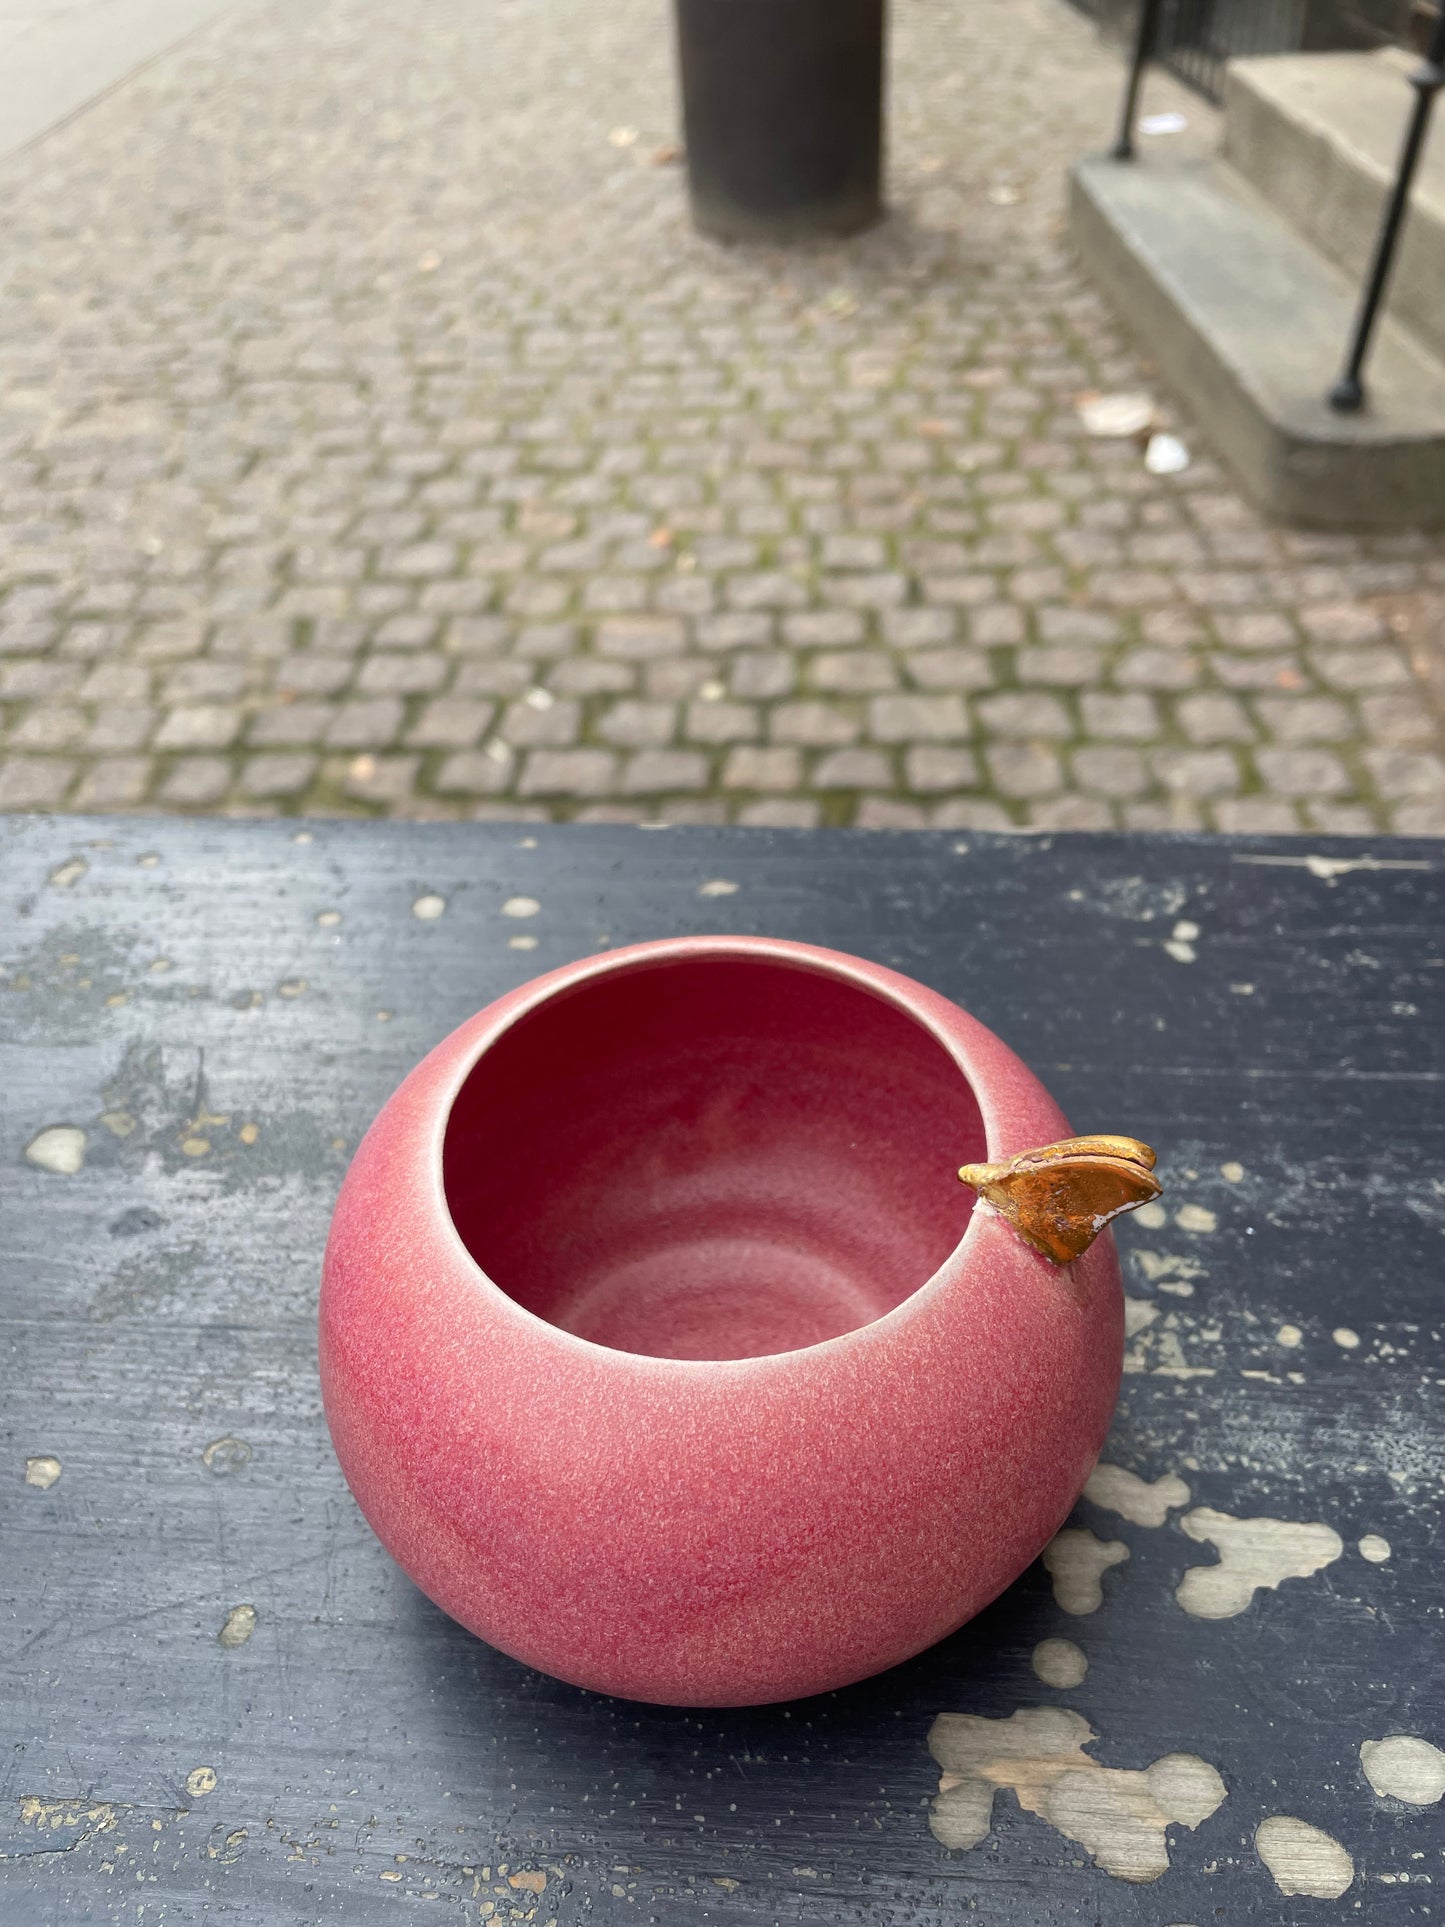 Håndlavede keramik krukker - Farve: Mørk Rosa med Guldsommerfugl